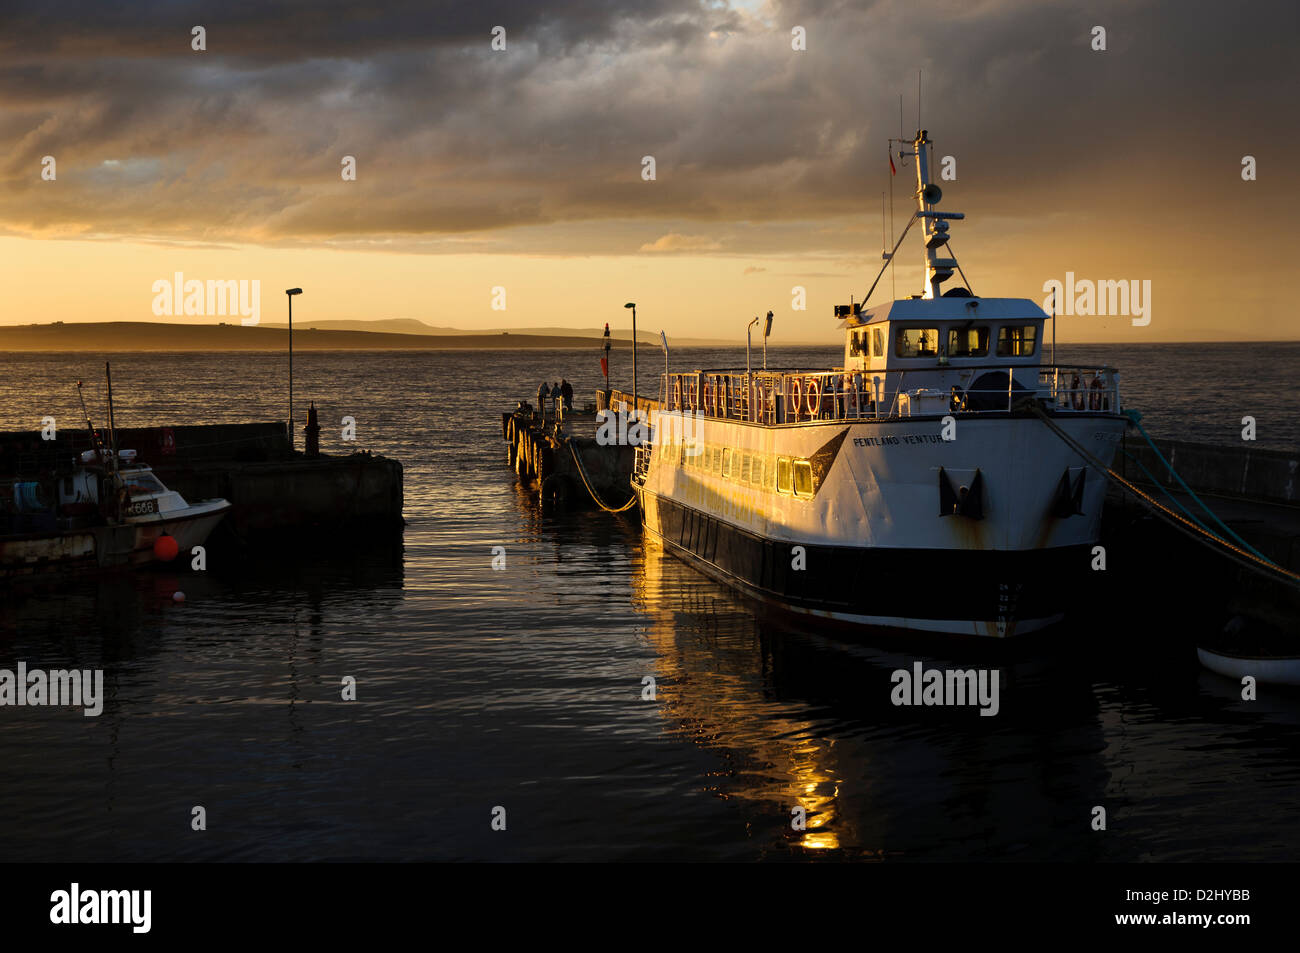 Der Passagier-Fähre Pentland Venture vertäut im Hafen von John o' Groats bei Sonnenuntergang. Caithness, Schottland. August. Stockfoto